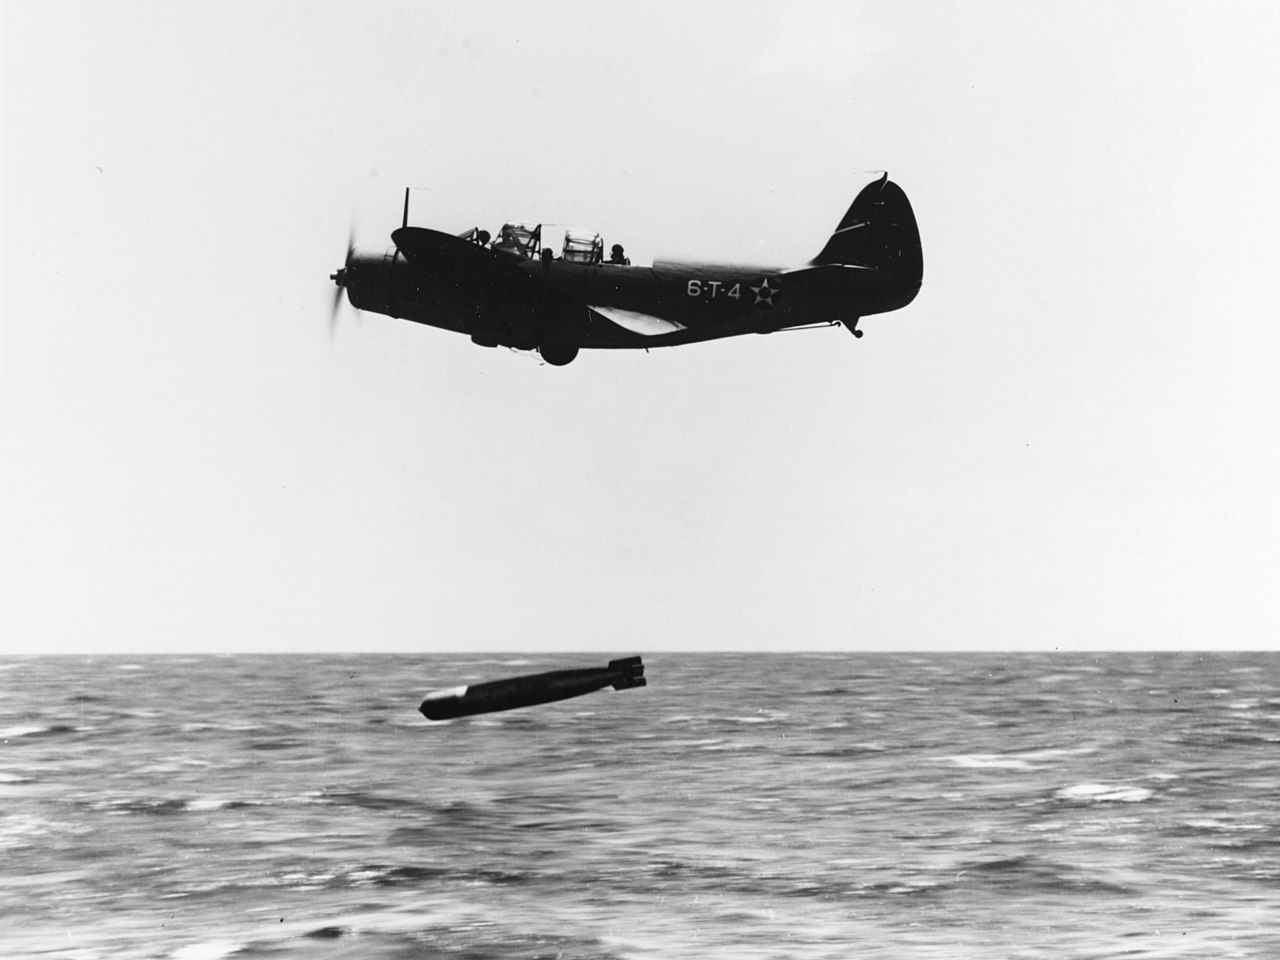 Douglas TBD-1 Devastator of the VT-6 squadron dropping Mk.13 torpedo, 20 October 1941